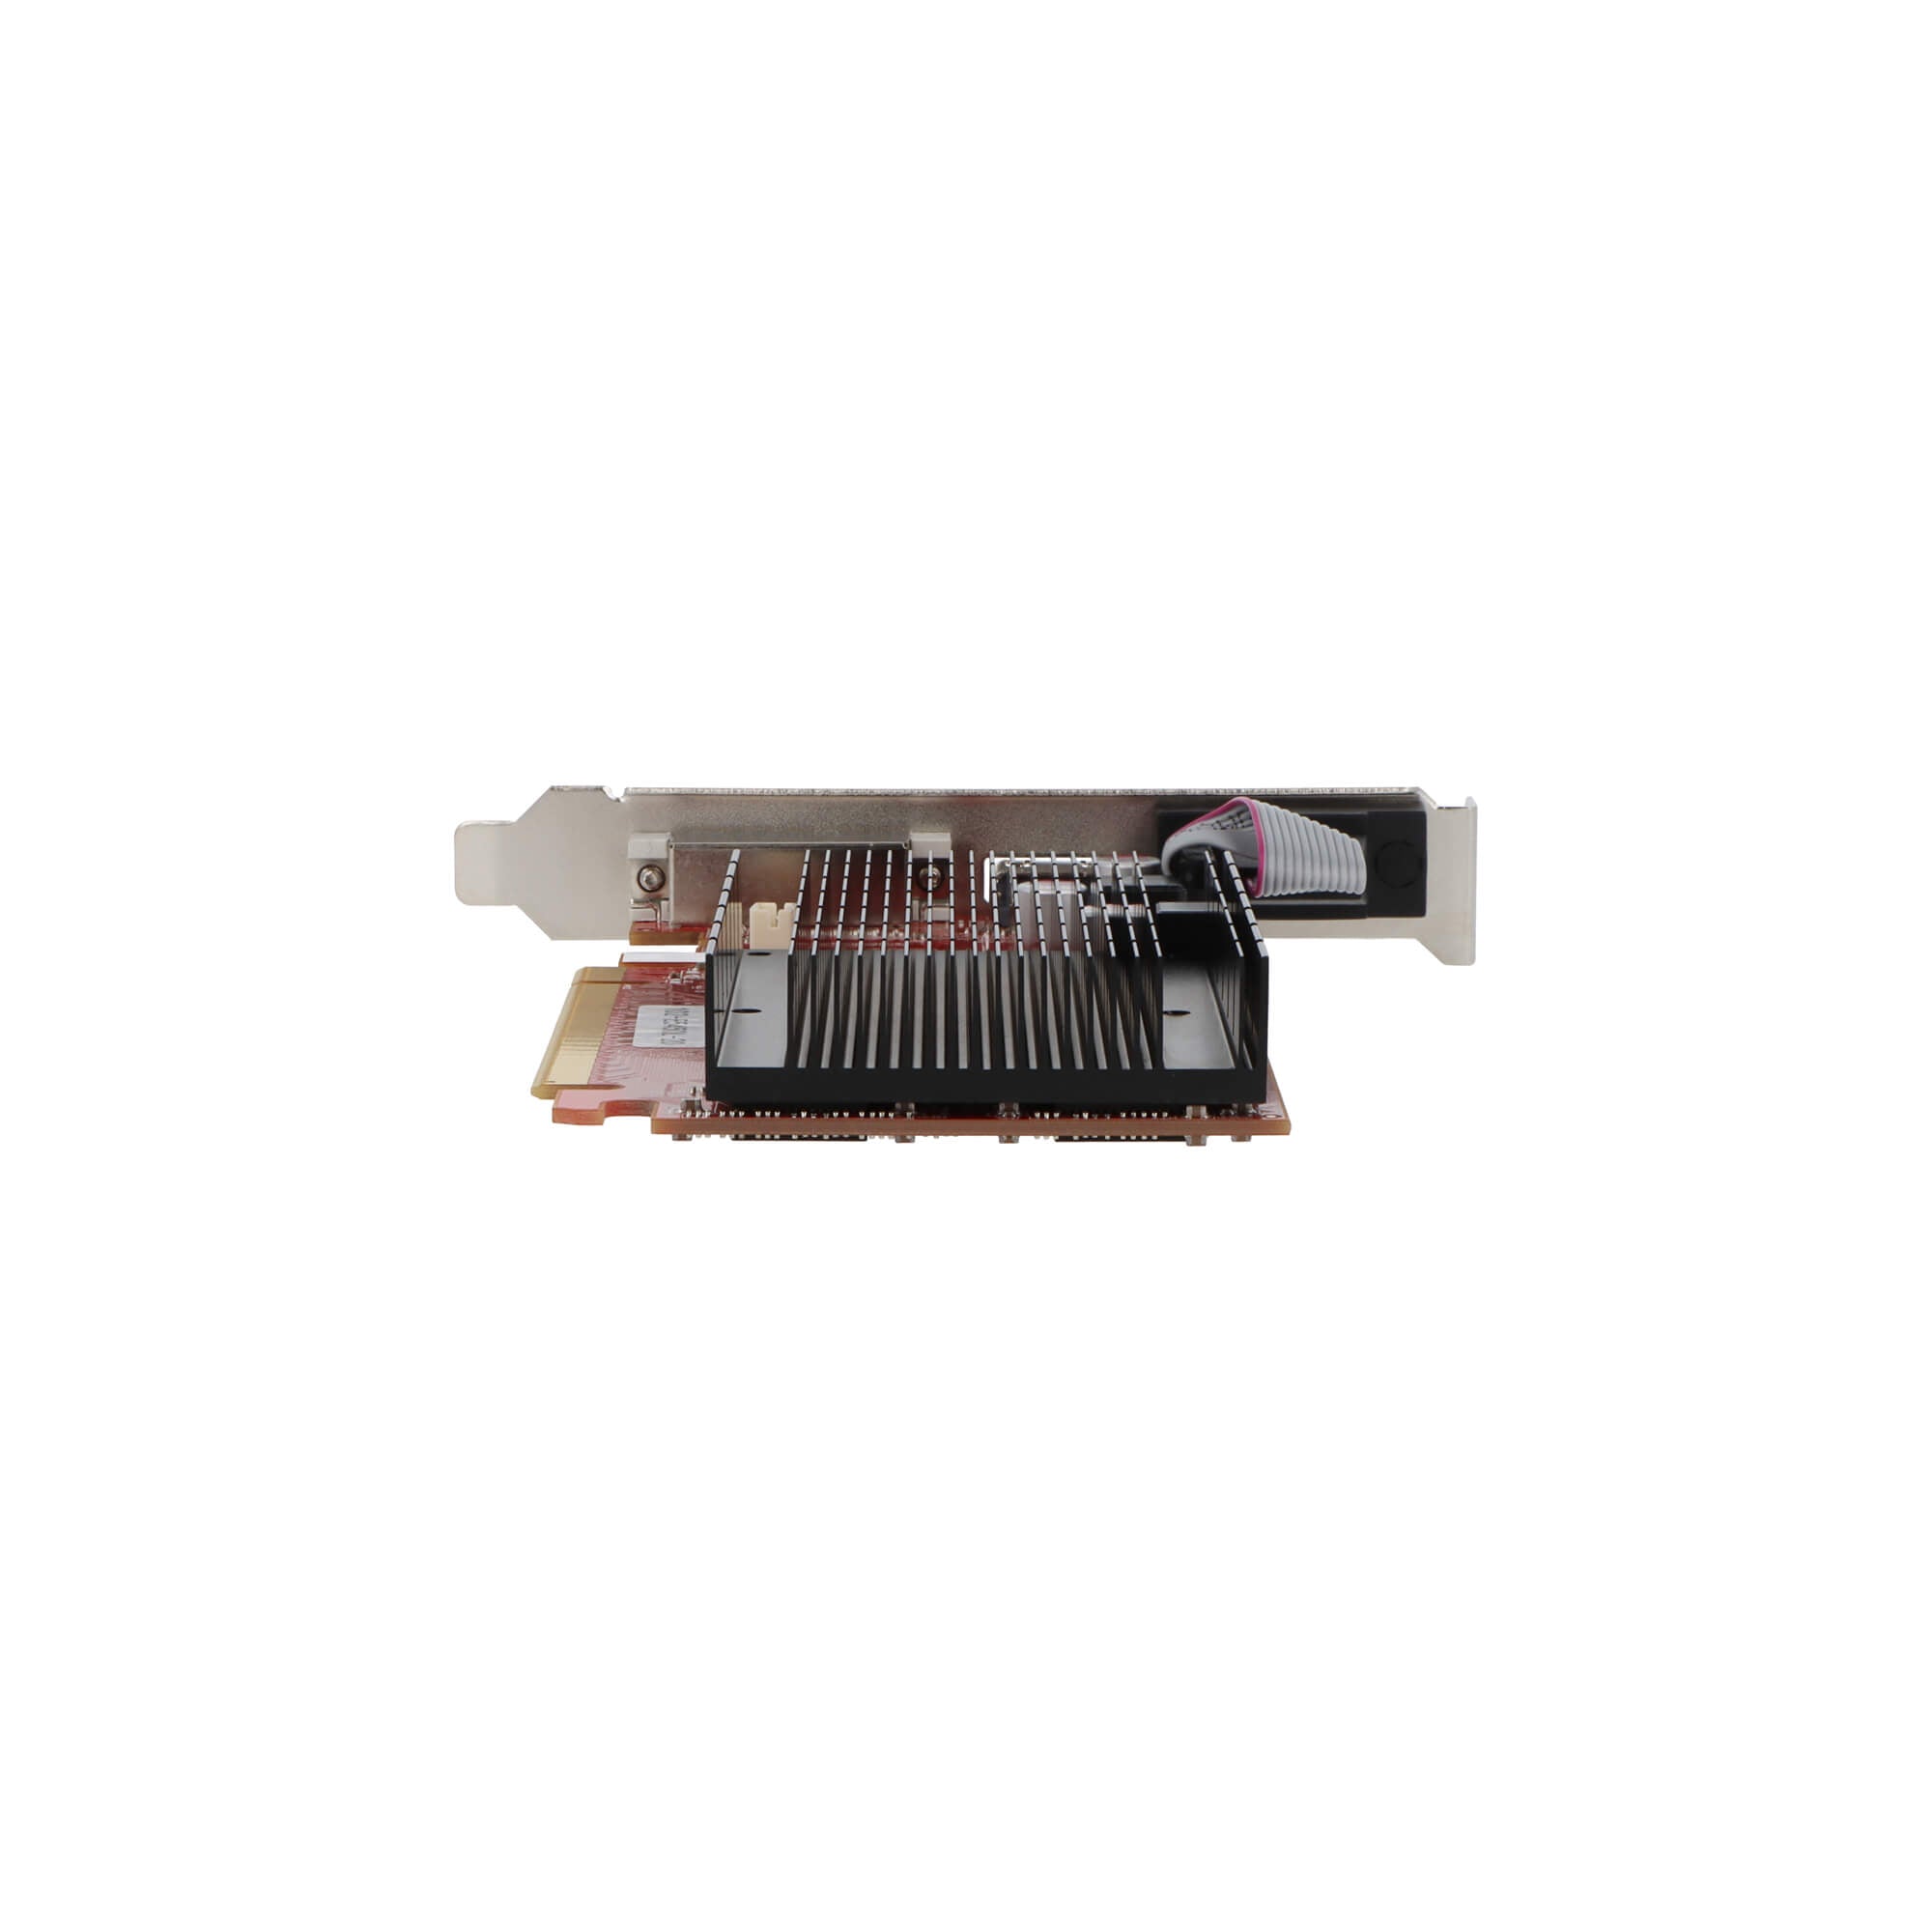 Radeon HD 5450 2GB GDDR3 (DVI-I, HDMI, VGA)